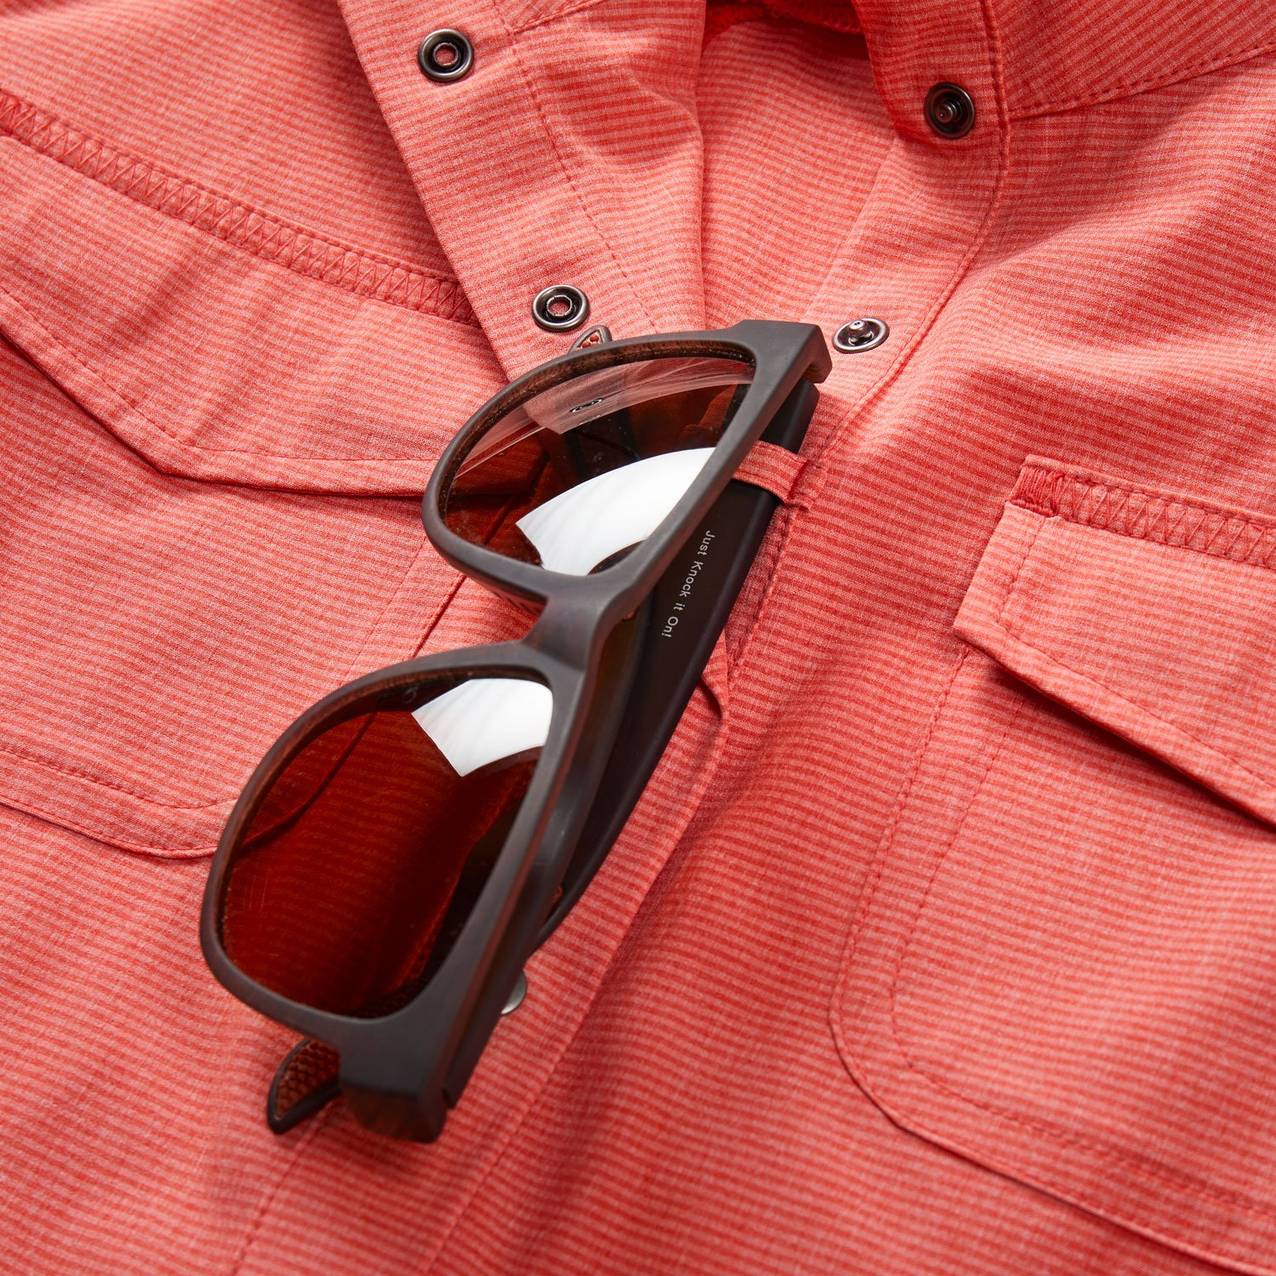 Sunglasses looped through fabric loop on shirt